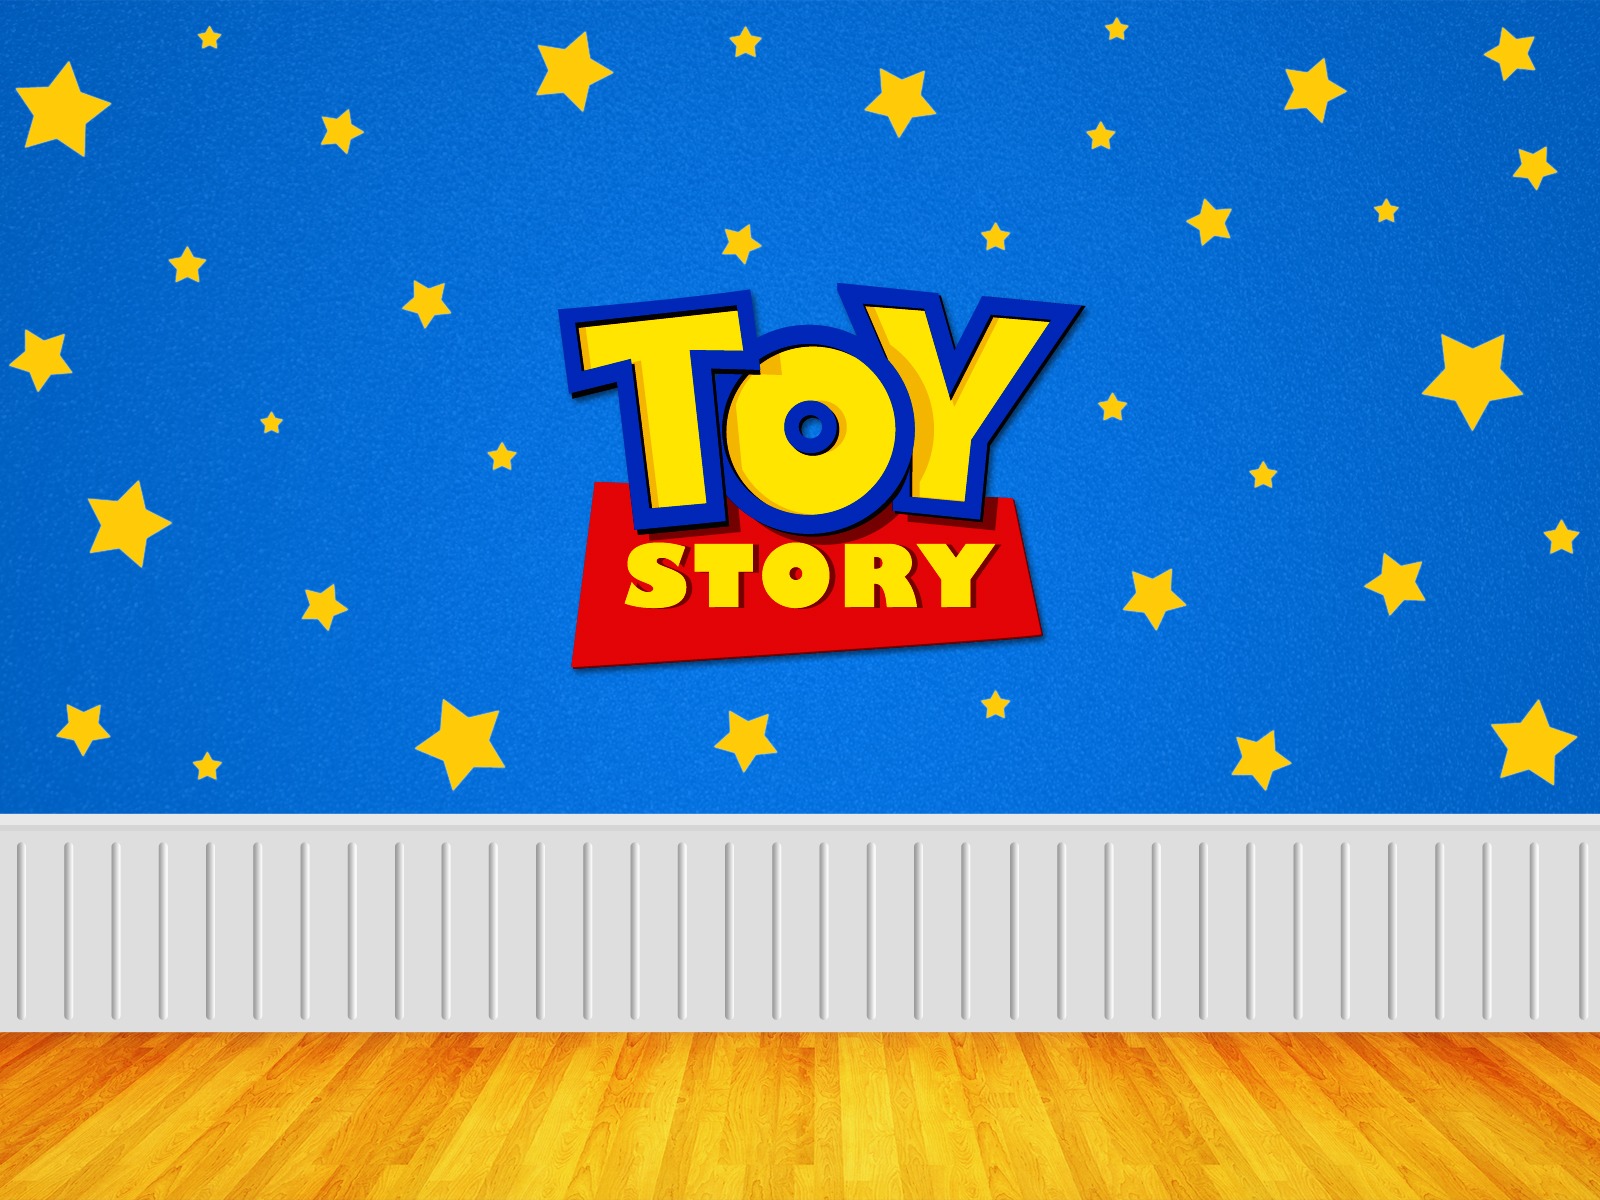 Toy Story a la vida real   Nota   Cine aztecaespectaculoscom